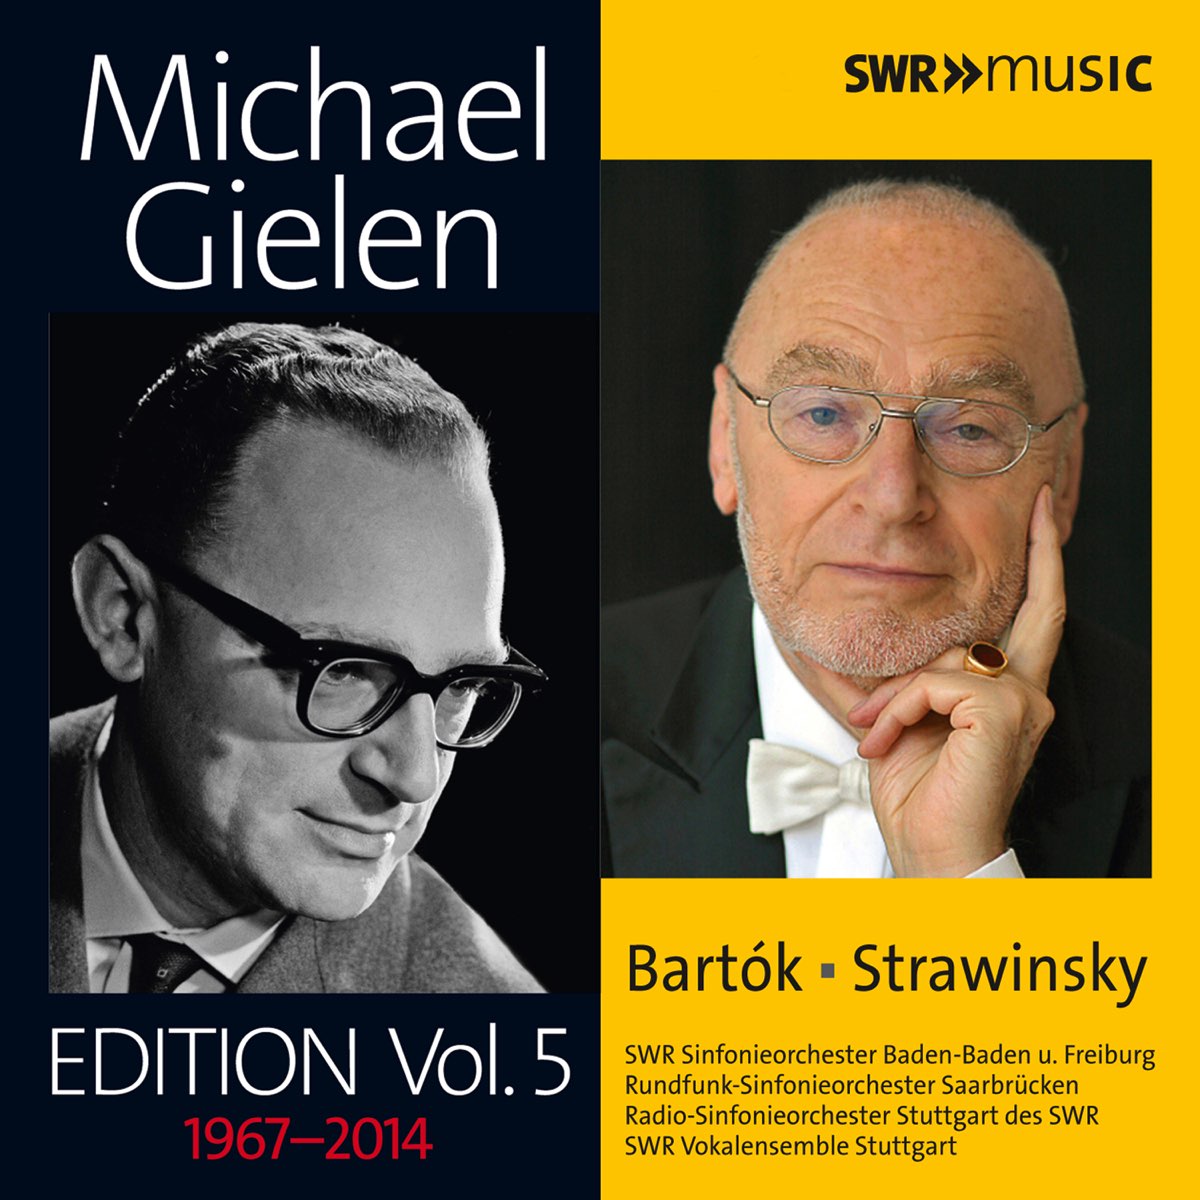 Michael Gielen Edition Vol. 5 by Michael Gielen on Apple Music